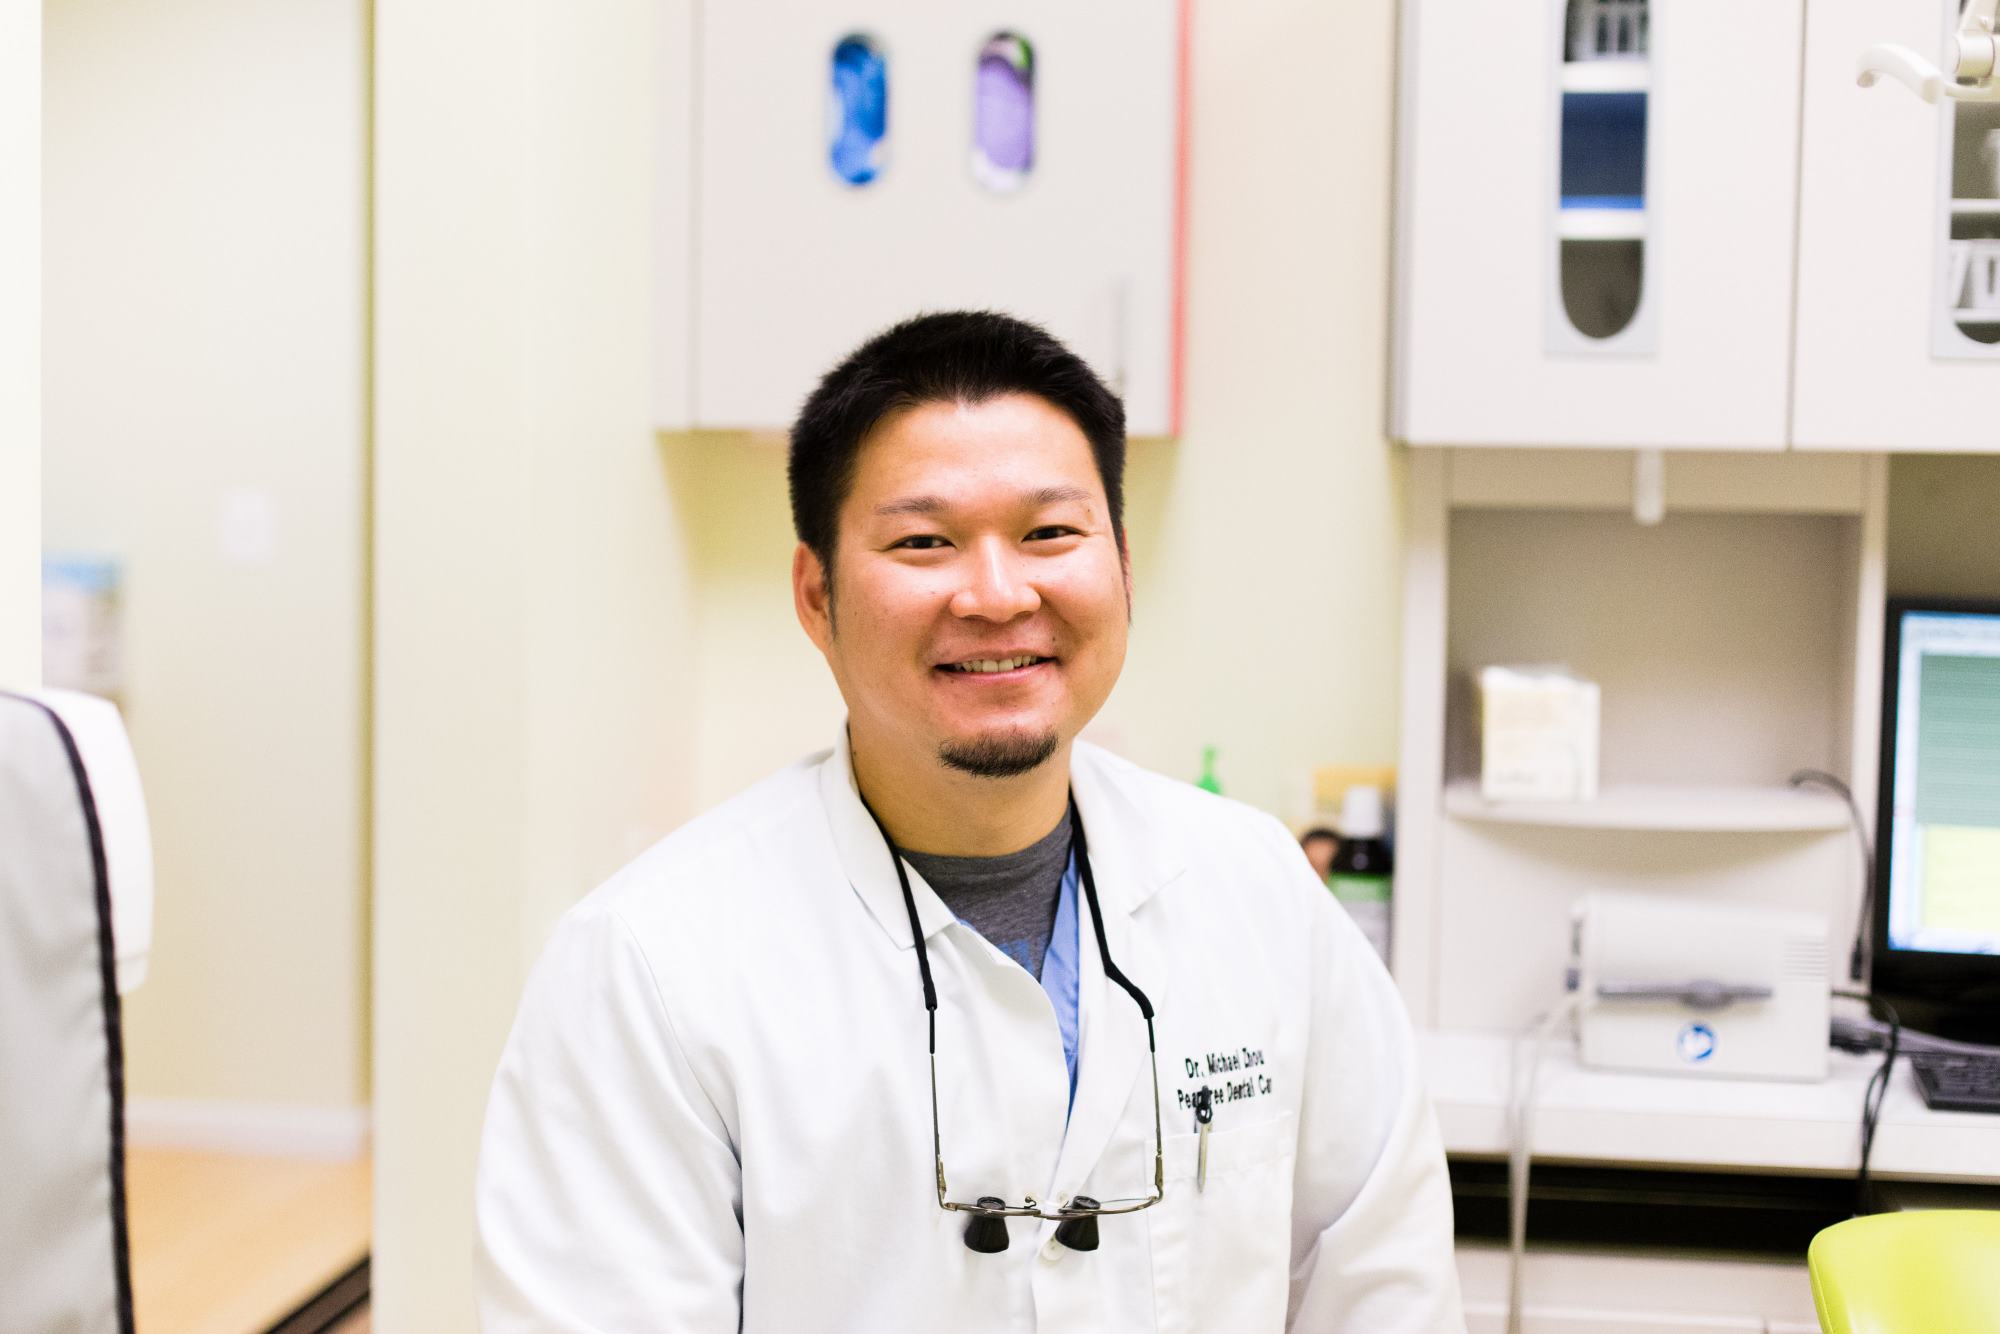 Dr. Michael Zhou, a family dentist in Ellicott City